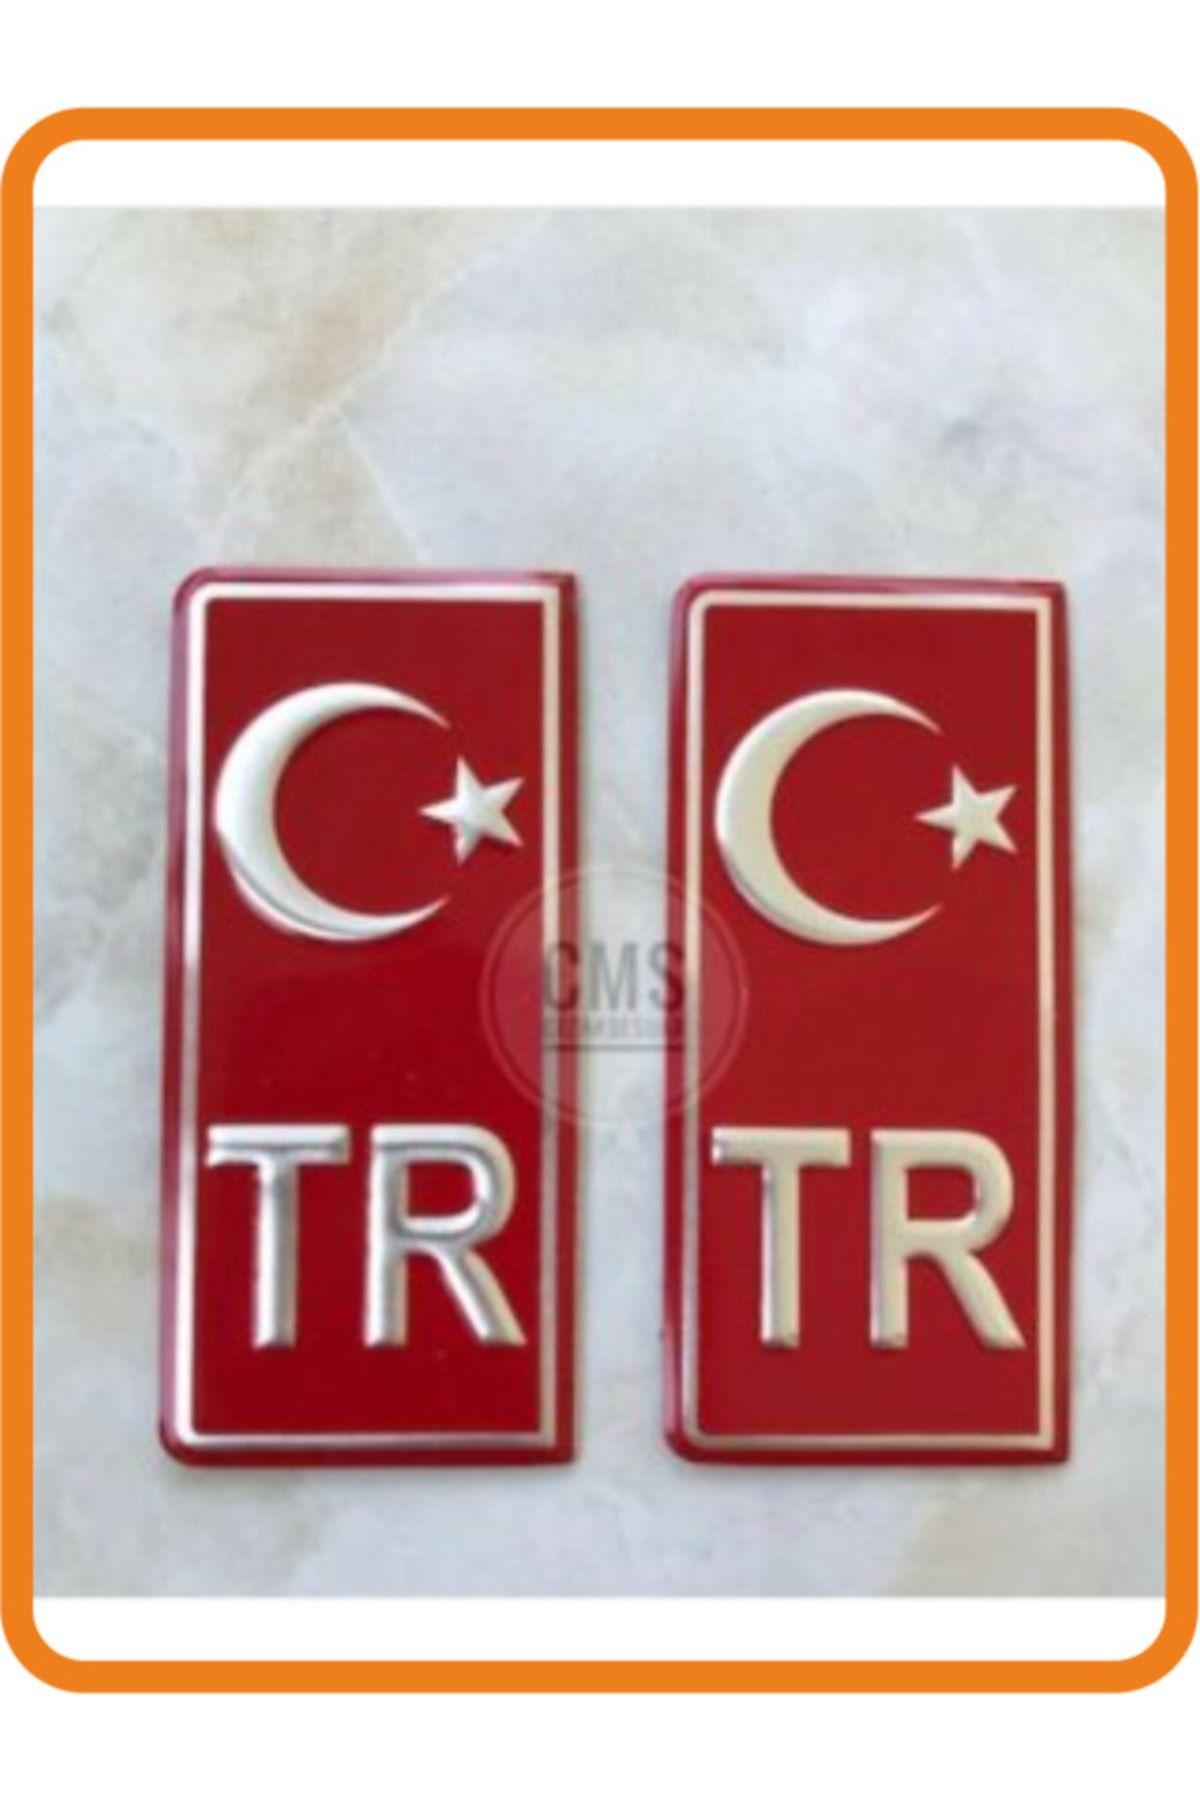 KDMAKSESUAR Tr Plaka Krom Sticker 2'li - Türkiye Plaka Krom Stıcker - Türkiye Plakalık Krom